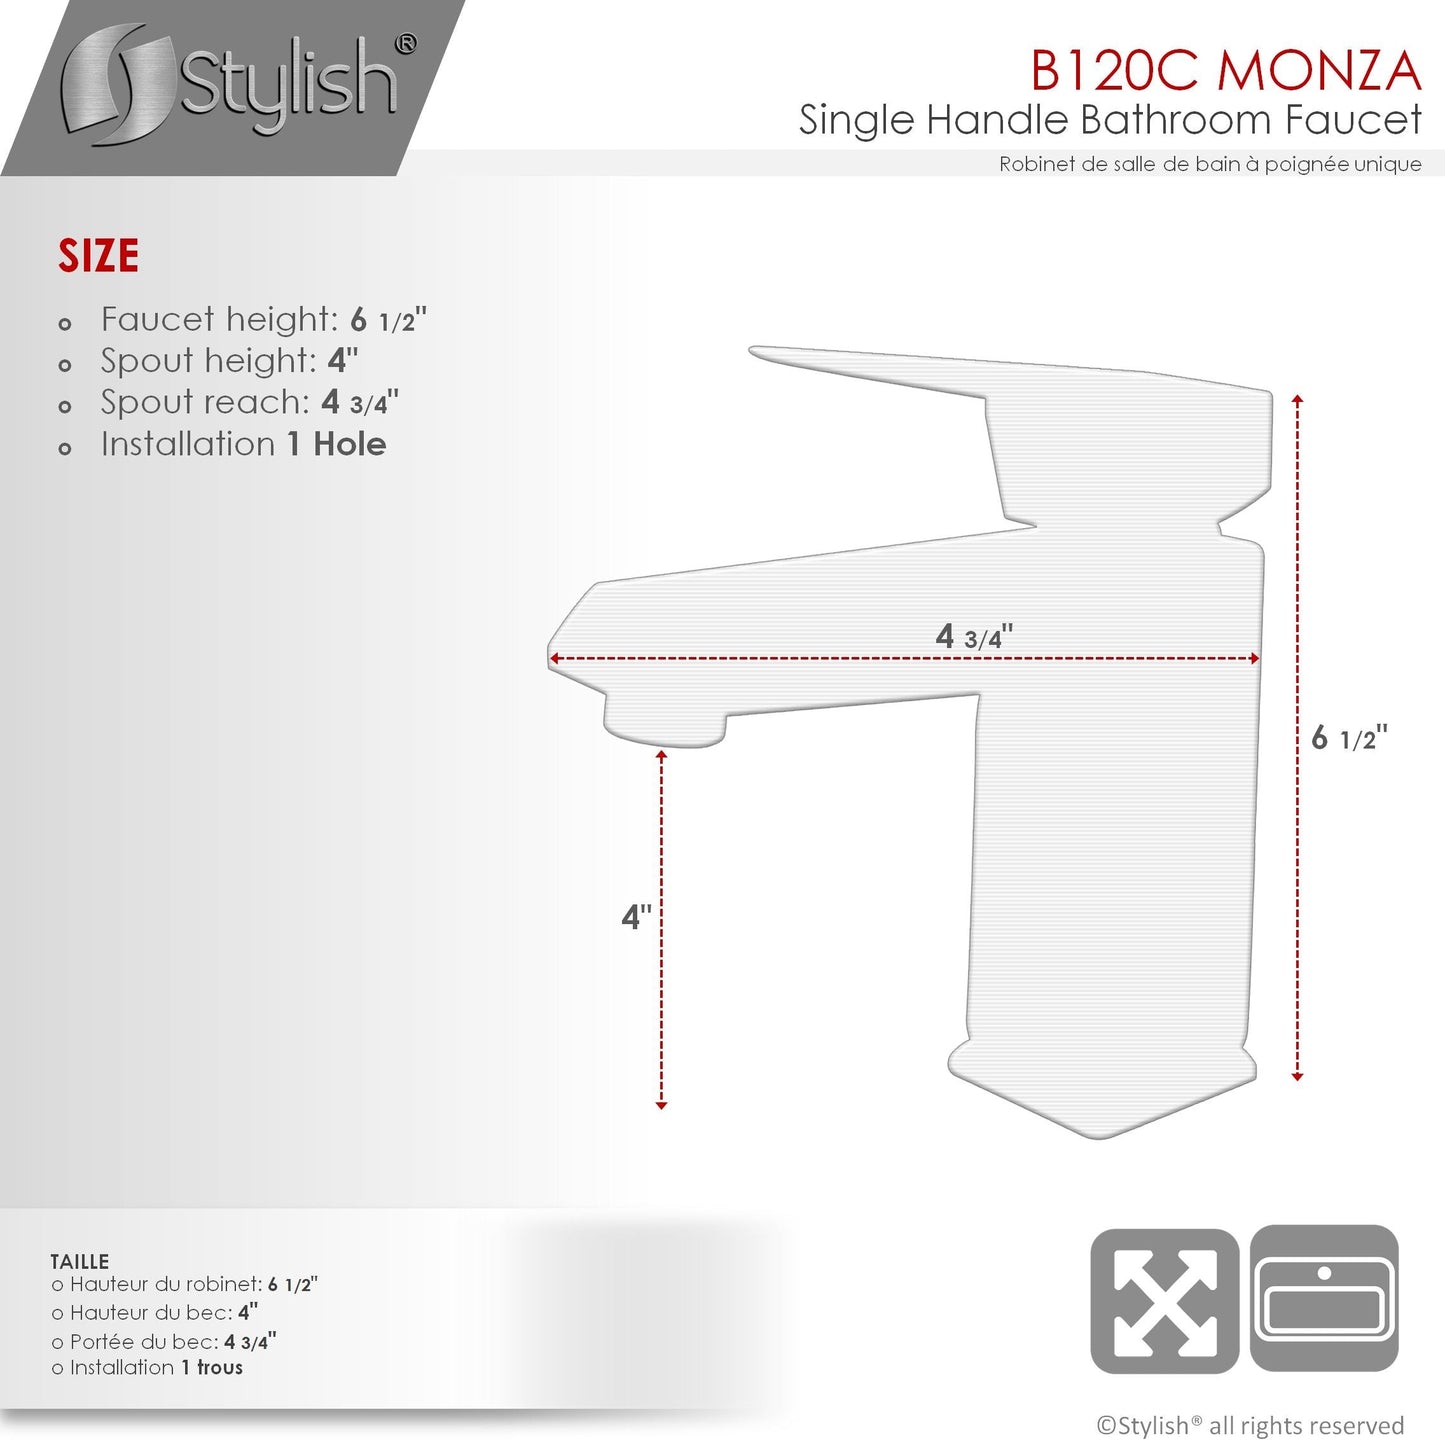 Stylish Monza Single Handle 6.5" Bathroom Faucet for Single Hole Brass Basin Mixer Tap, Polished Chrome Finish B-120C